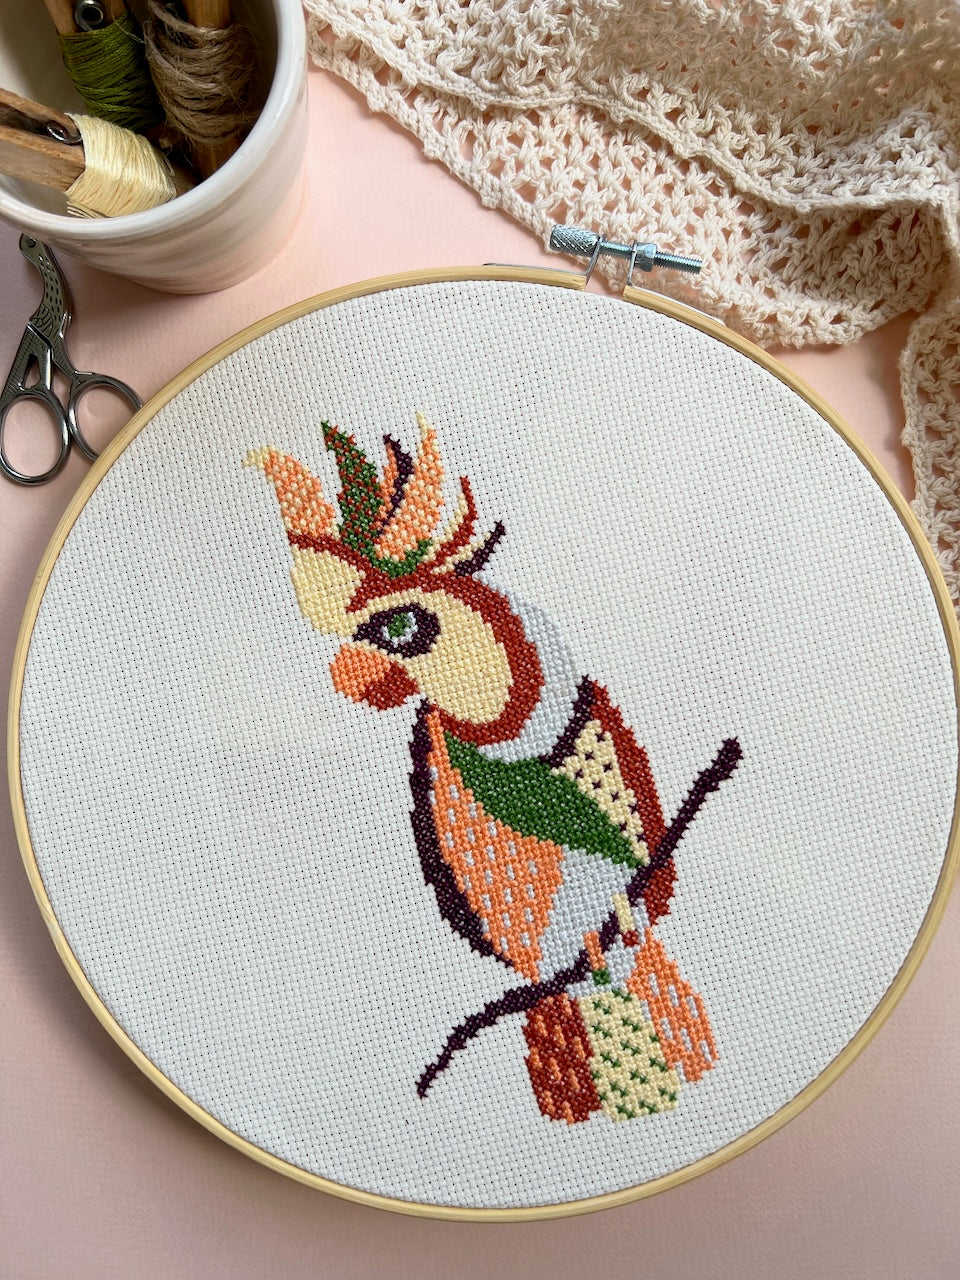 Cockatoo - cross stitch pattern